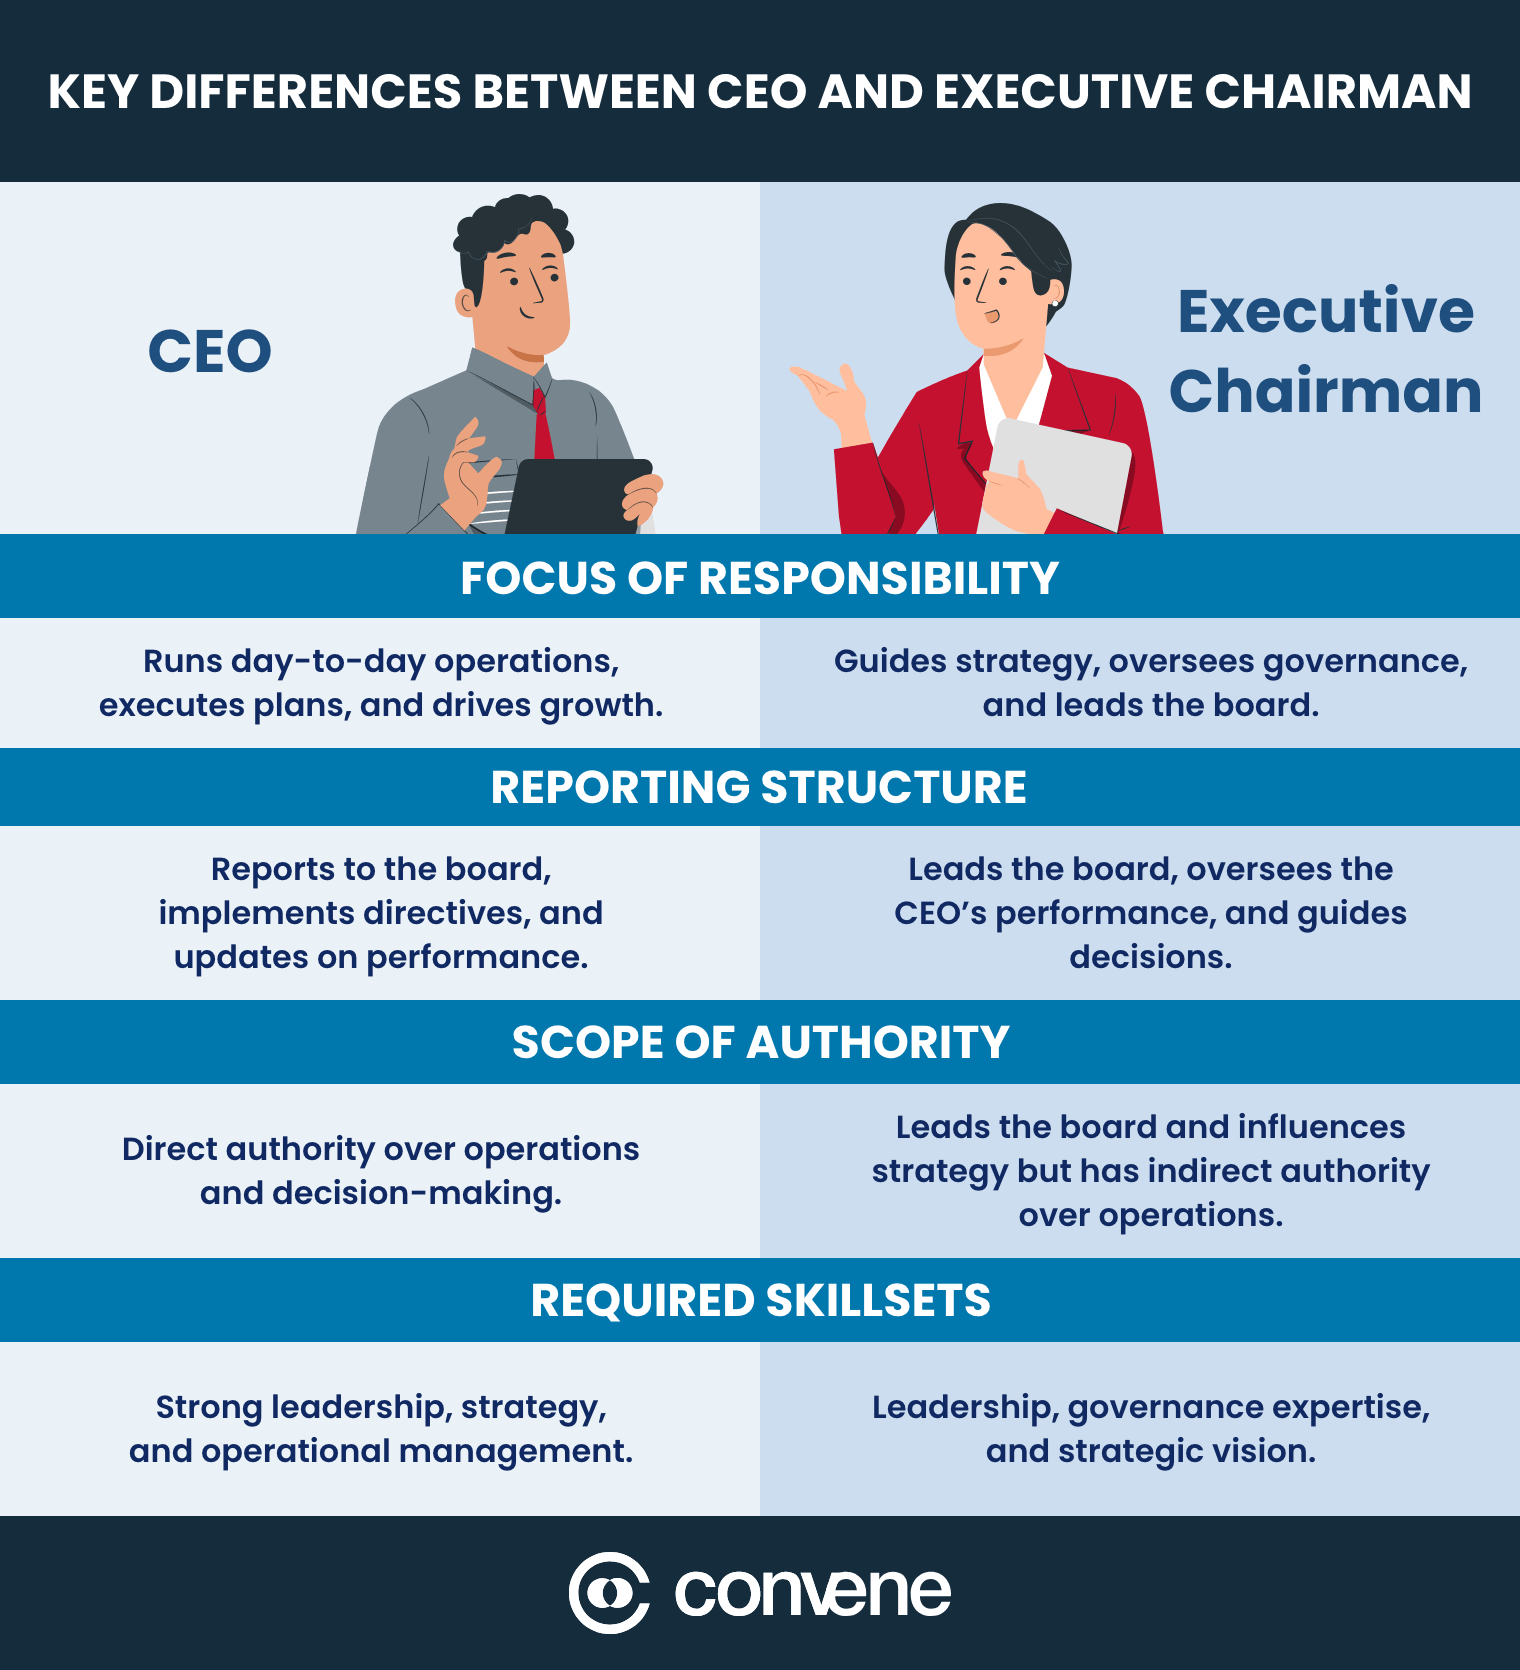 Executive Chairman vs CEO